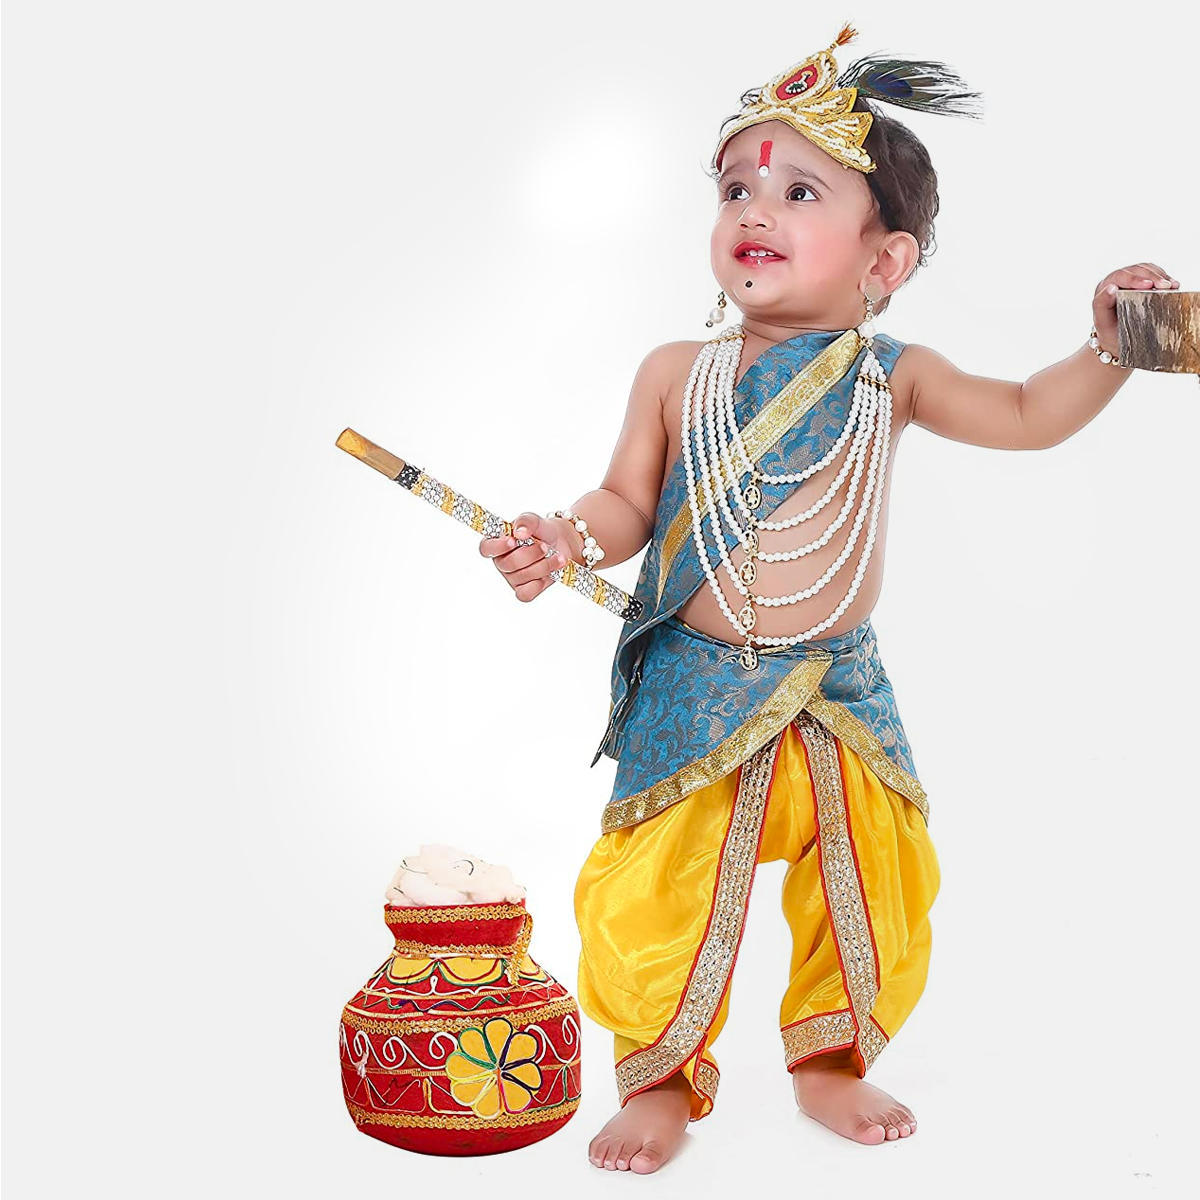 Baby Krishna Dress for Janmashtami with Krishna Mukut, Peacock Feather & Flute - Yellow-Ferozi